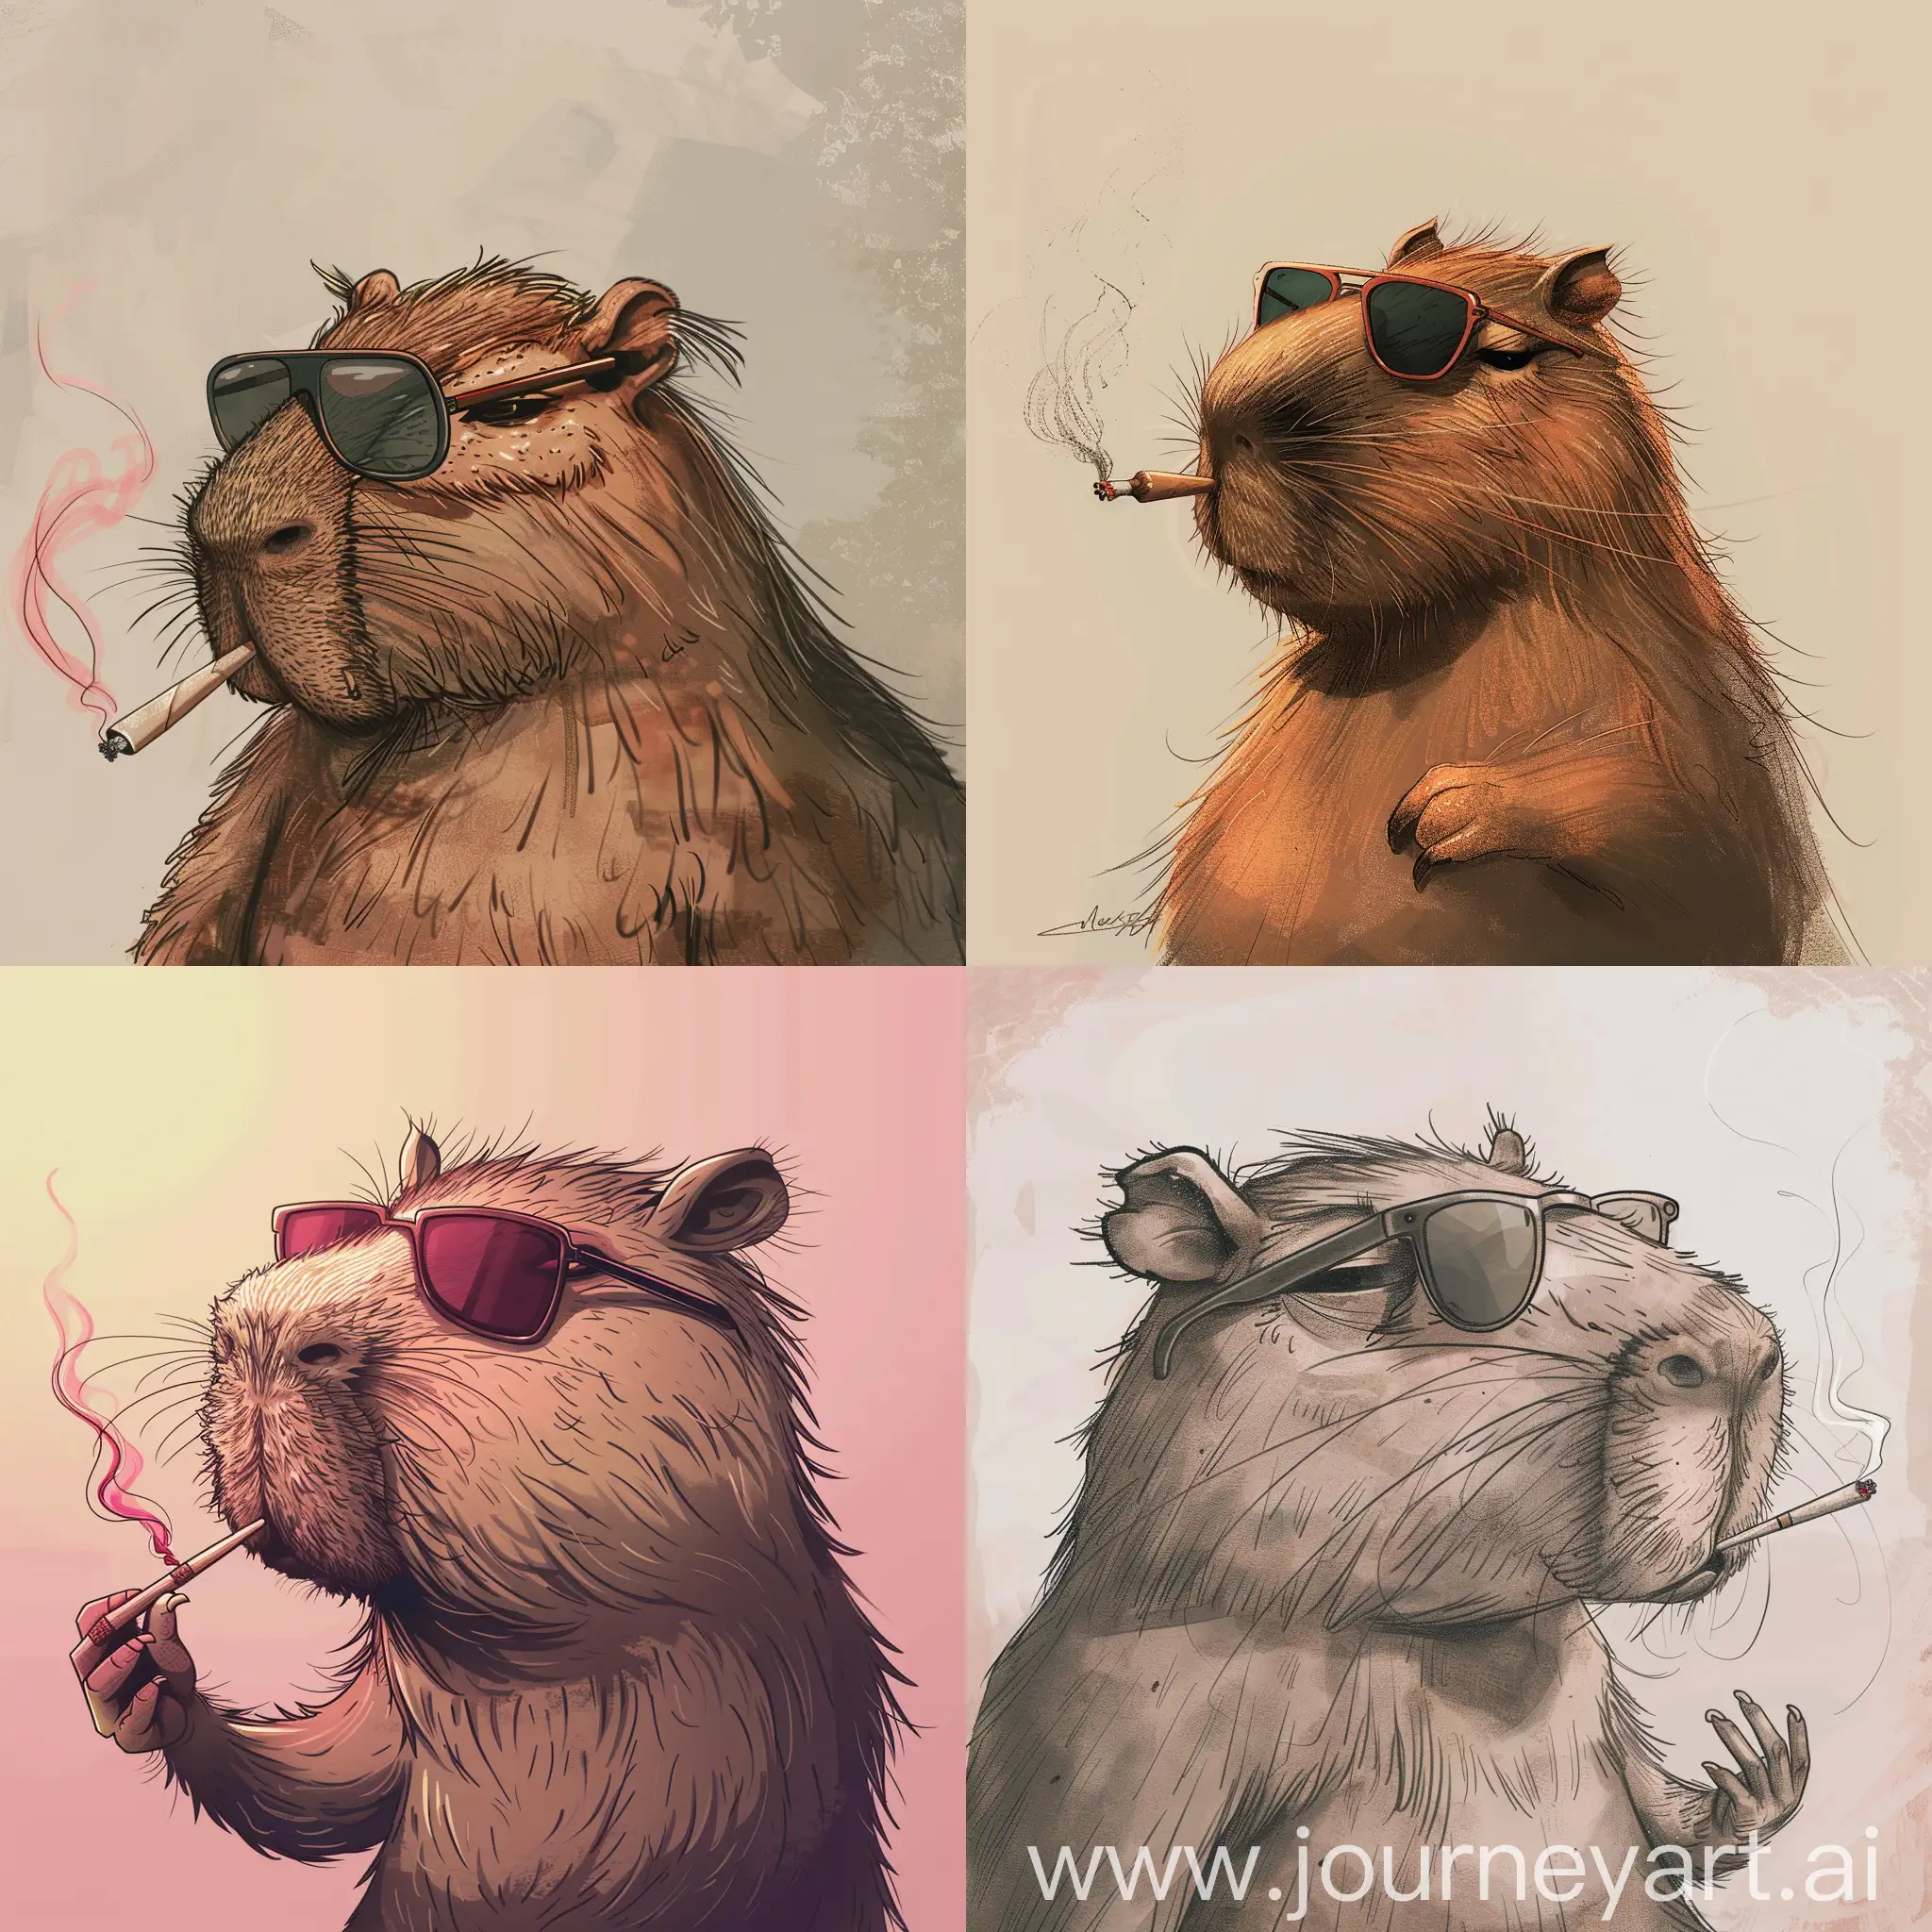 draw a cool capybara, smoking a joint, wearing sunglasses, cartoon artstyle